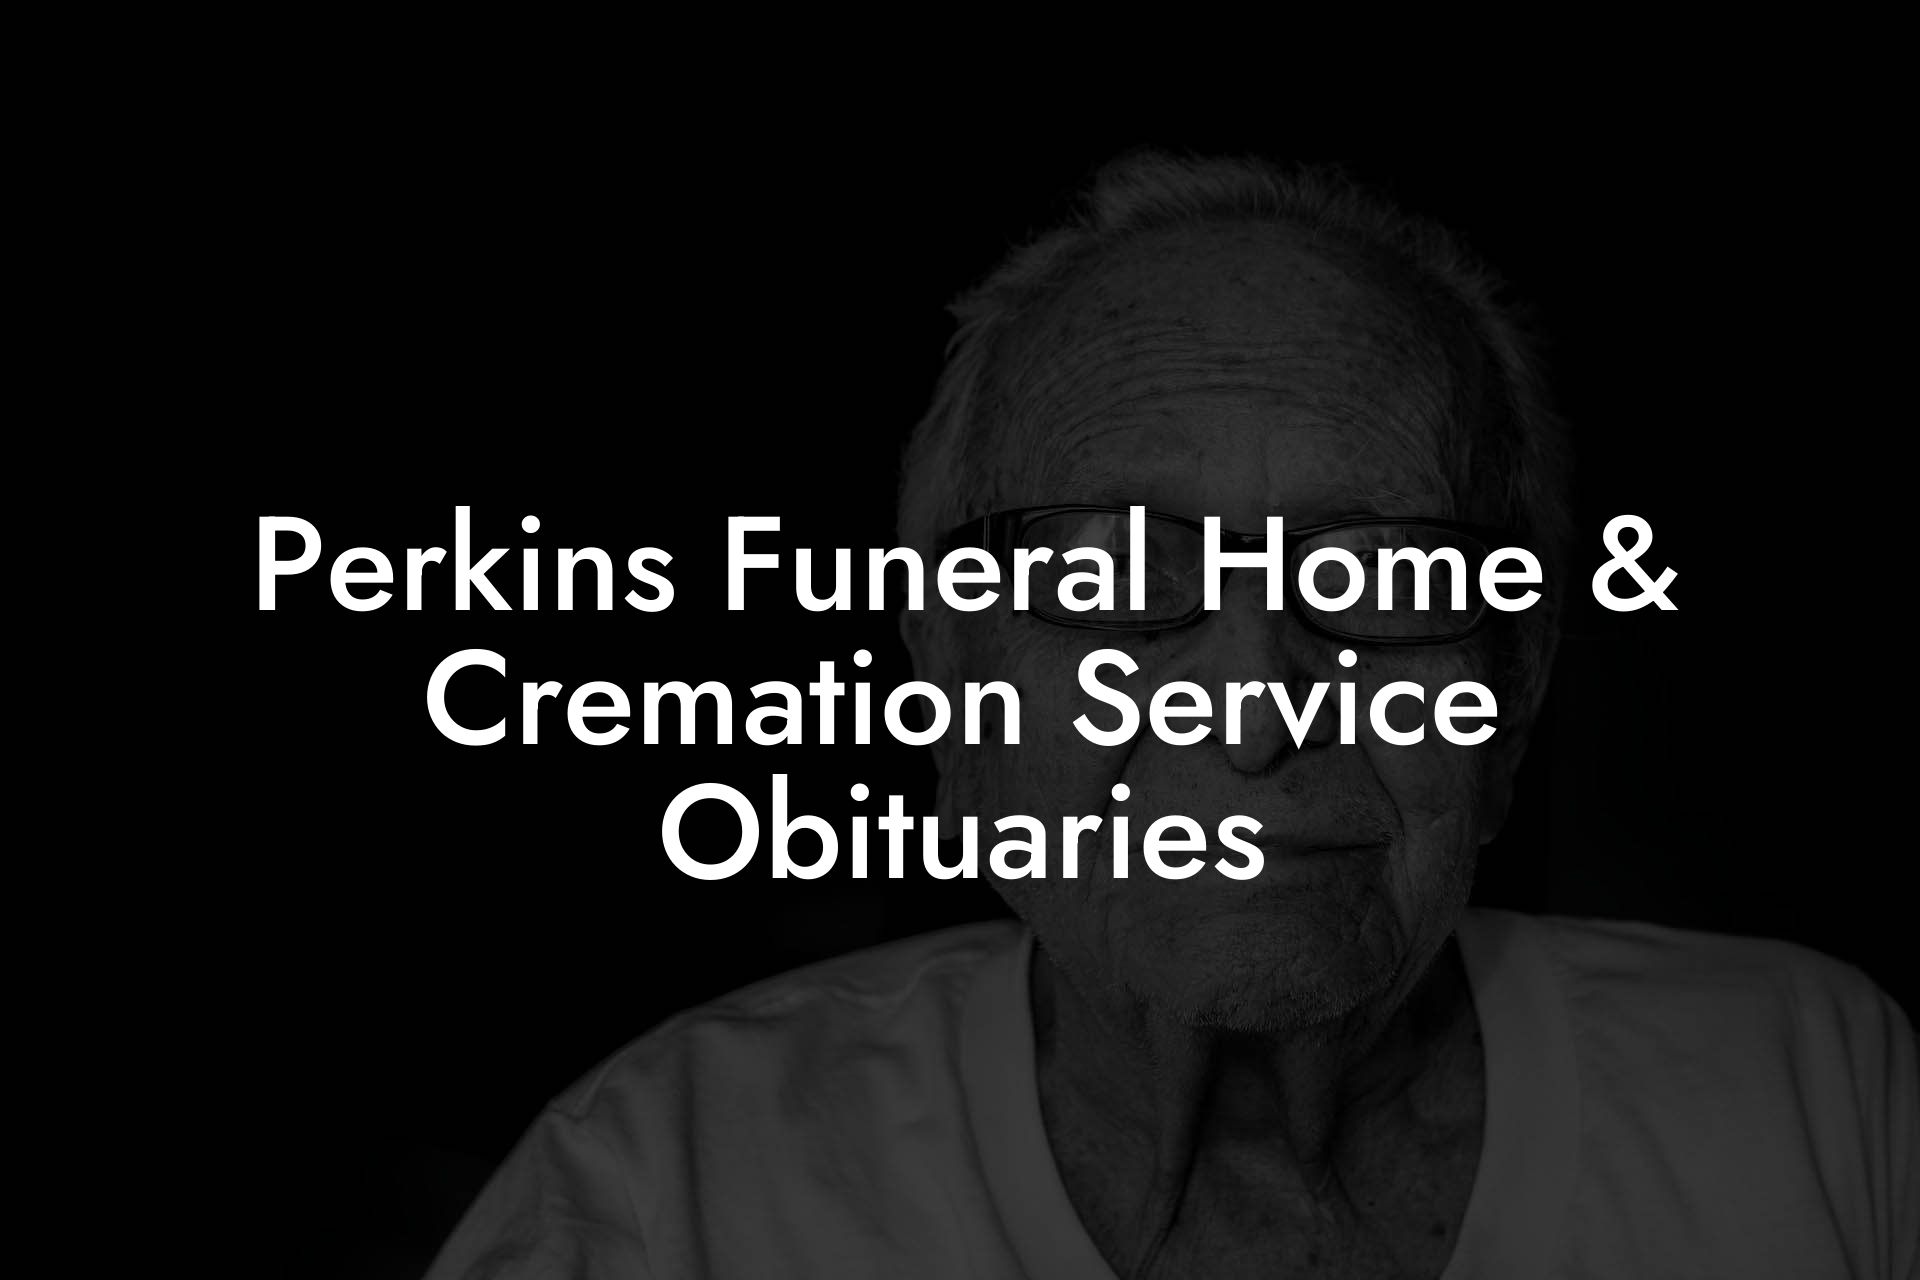 Perkins Funeral Home & Cremation Service Obituaries